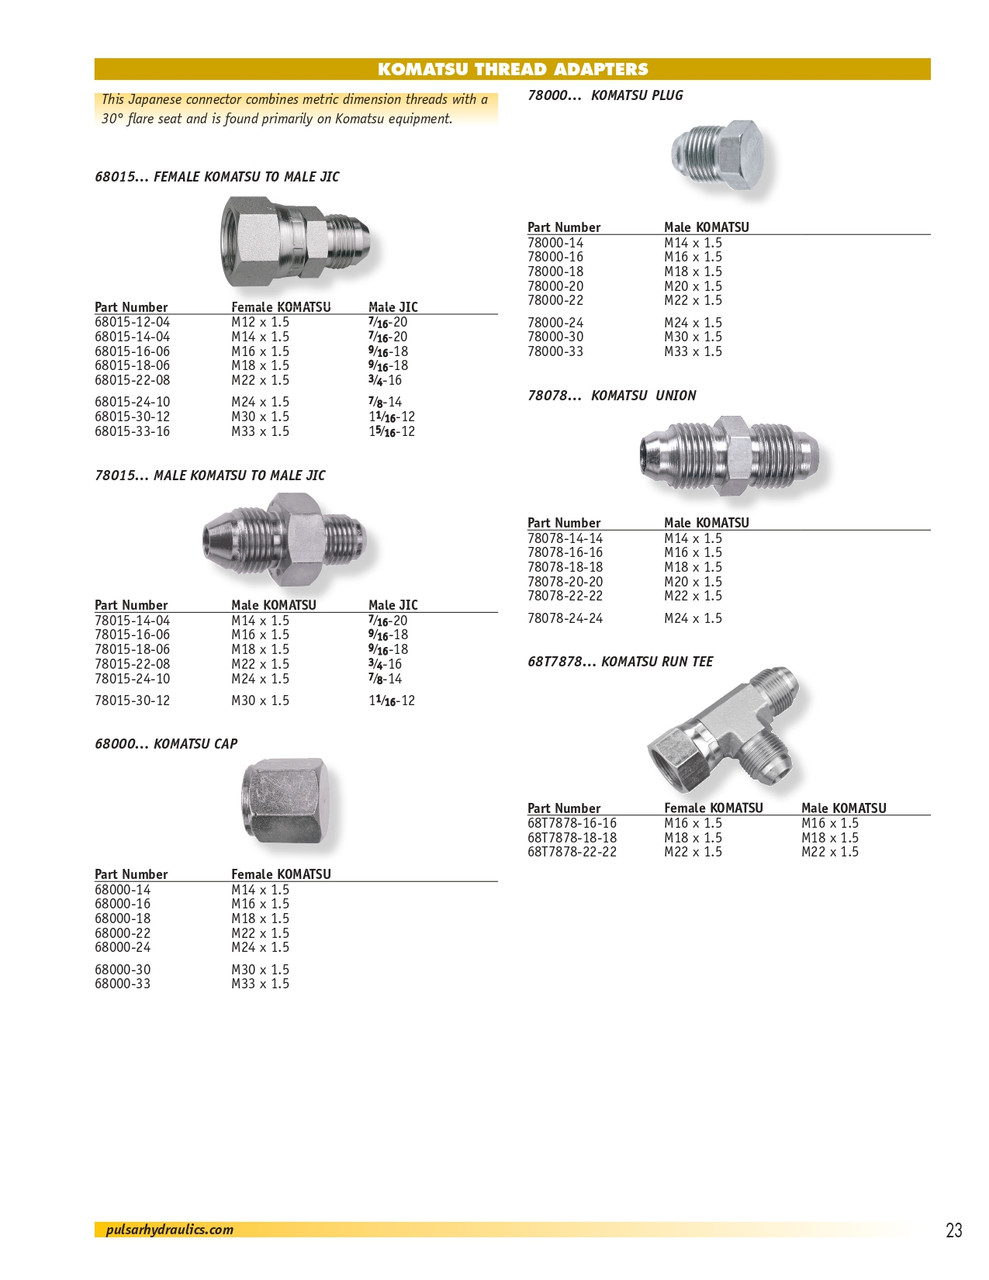 M33-1.5 Steel Komatsu Plug   78000-33